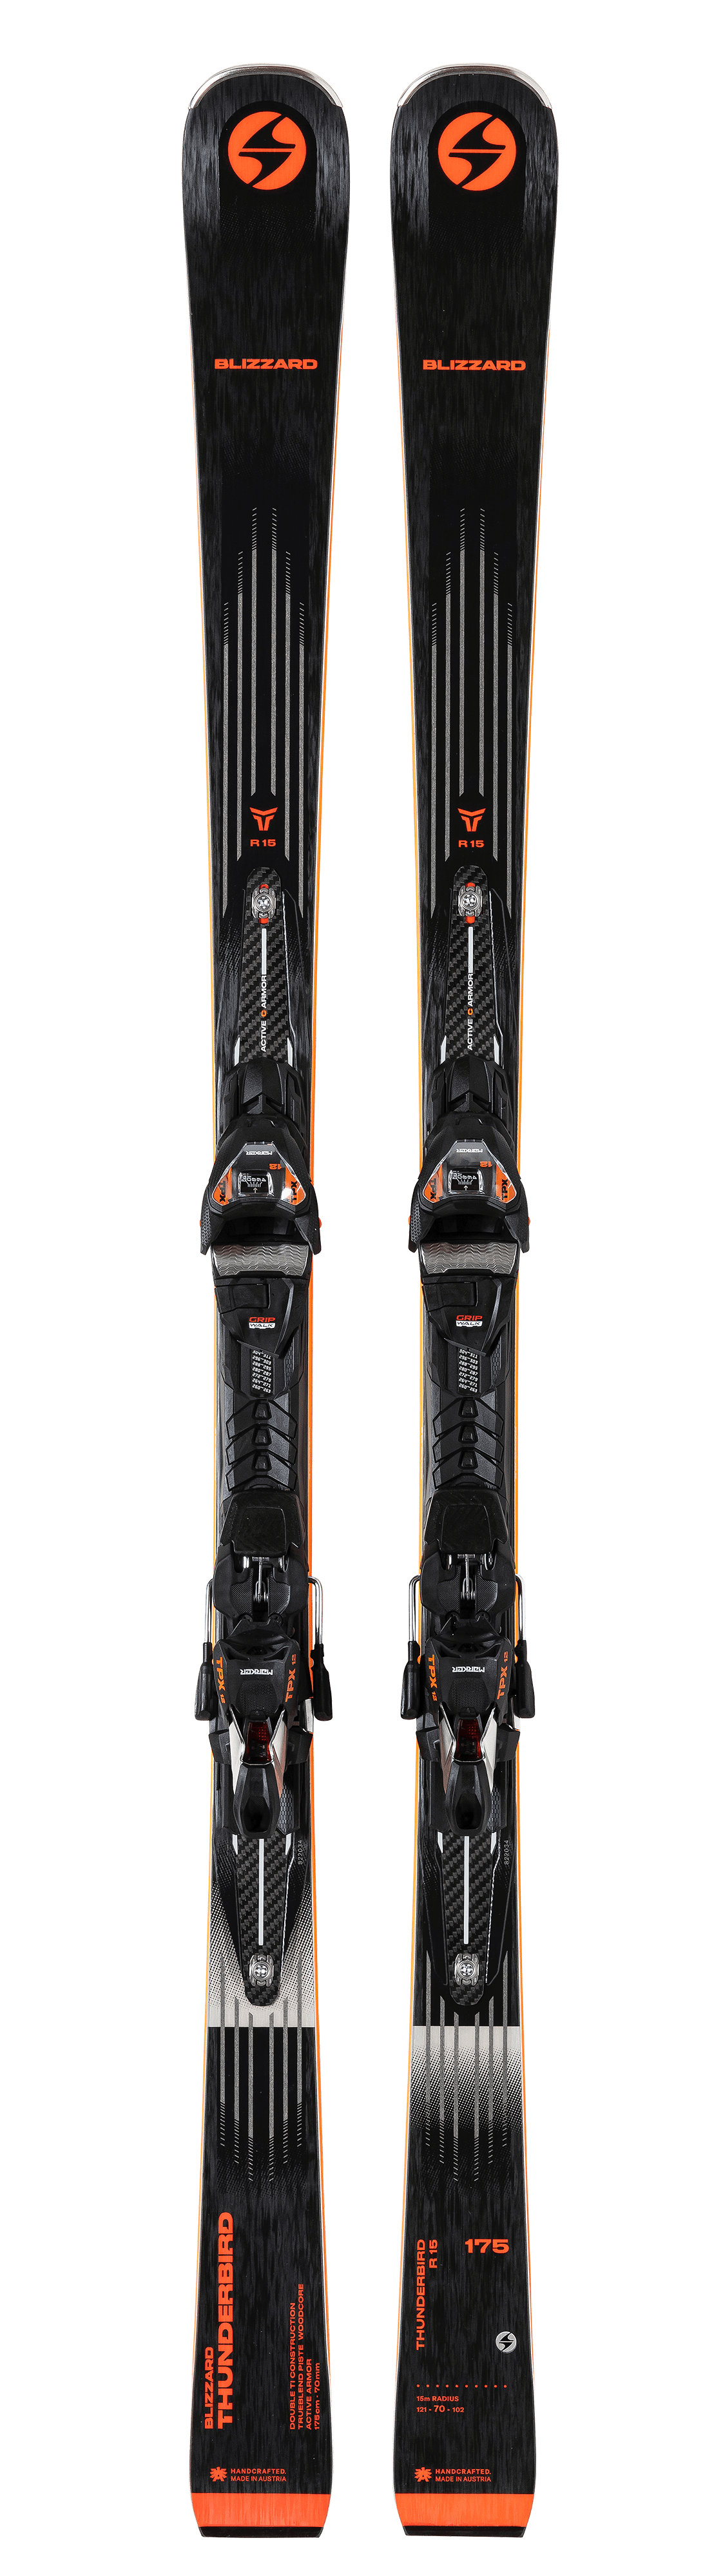 AA102 177cm Ski Carvingski Blizzard CMX 10 mit Bindung 